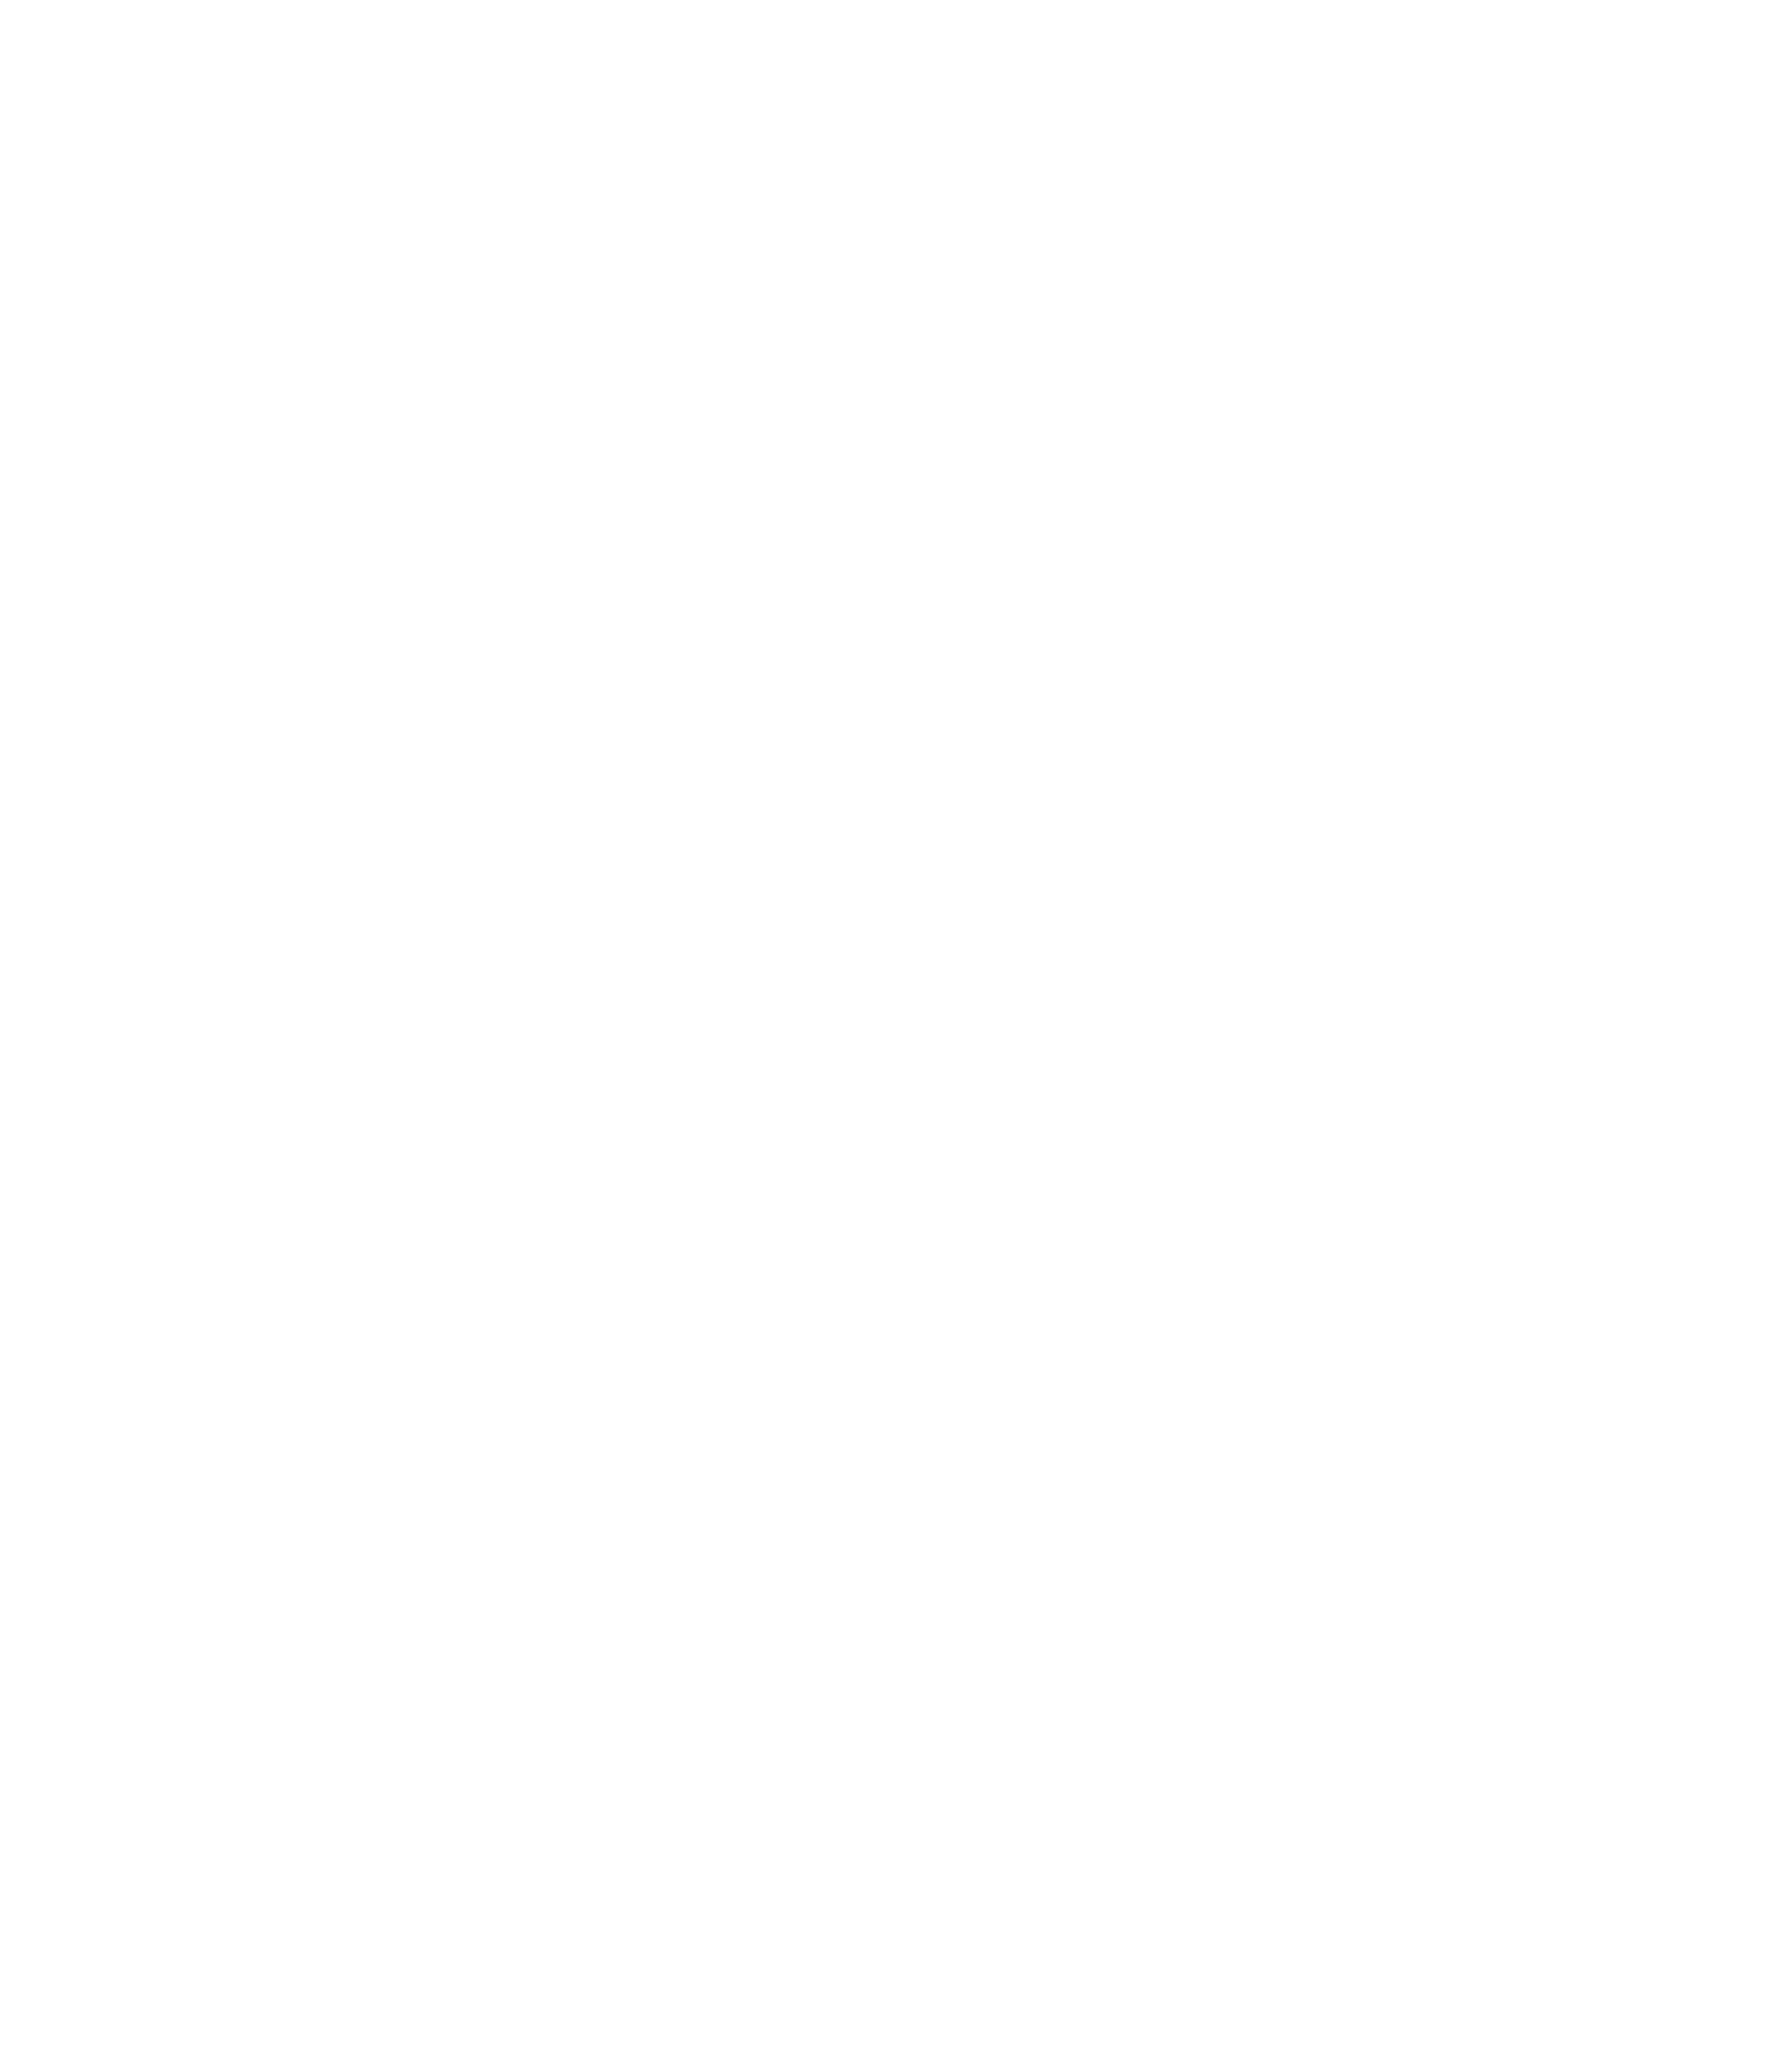 QBE Logo - Qbe Logo